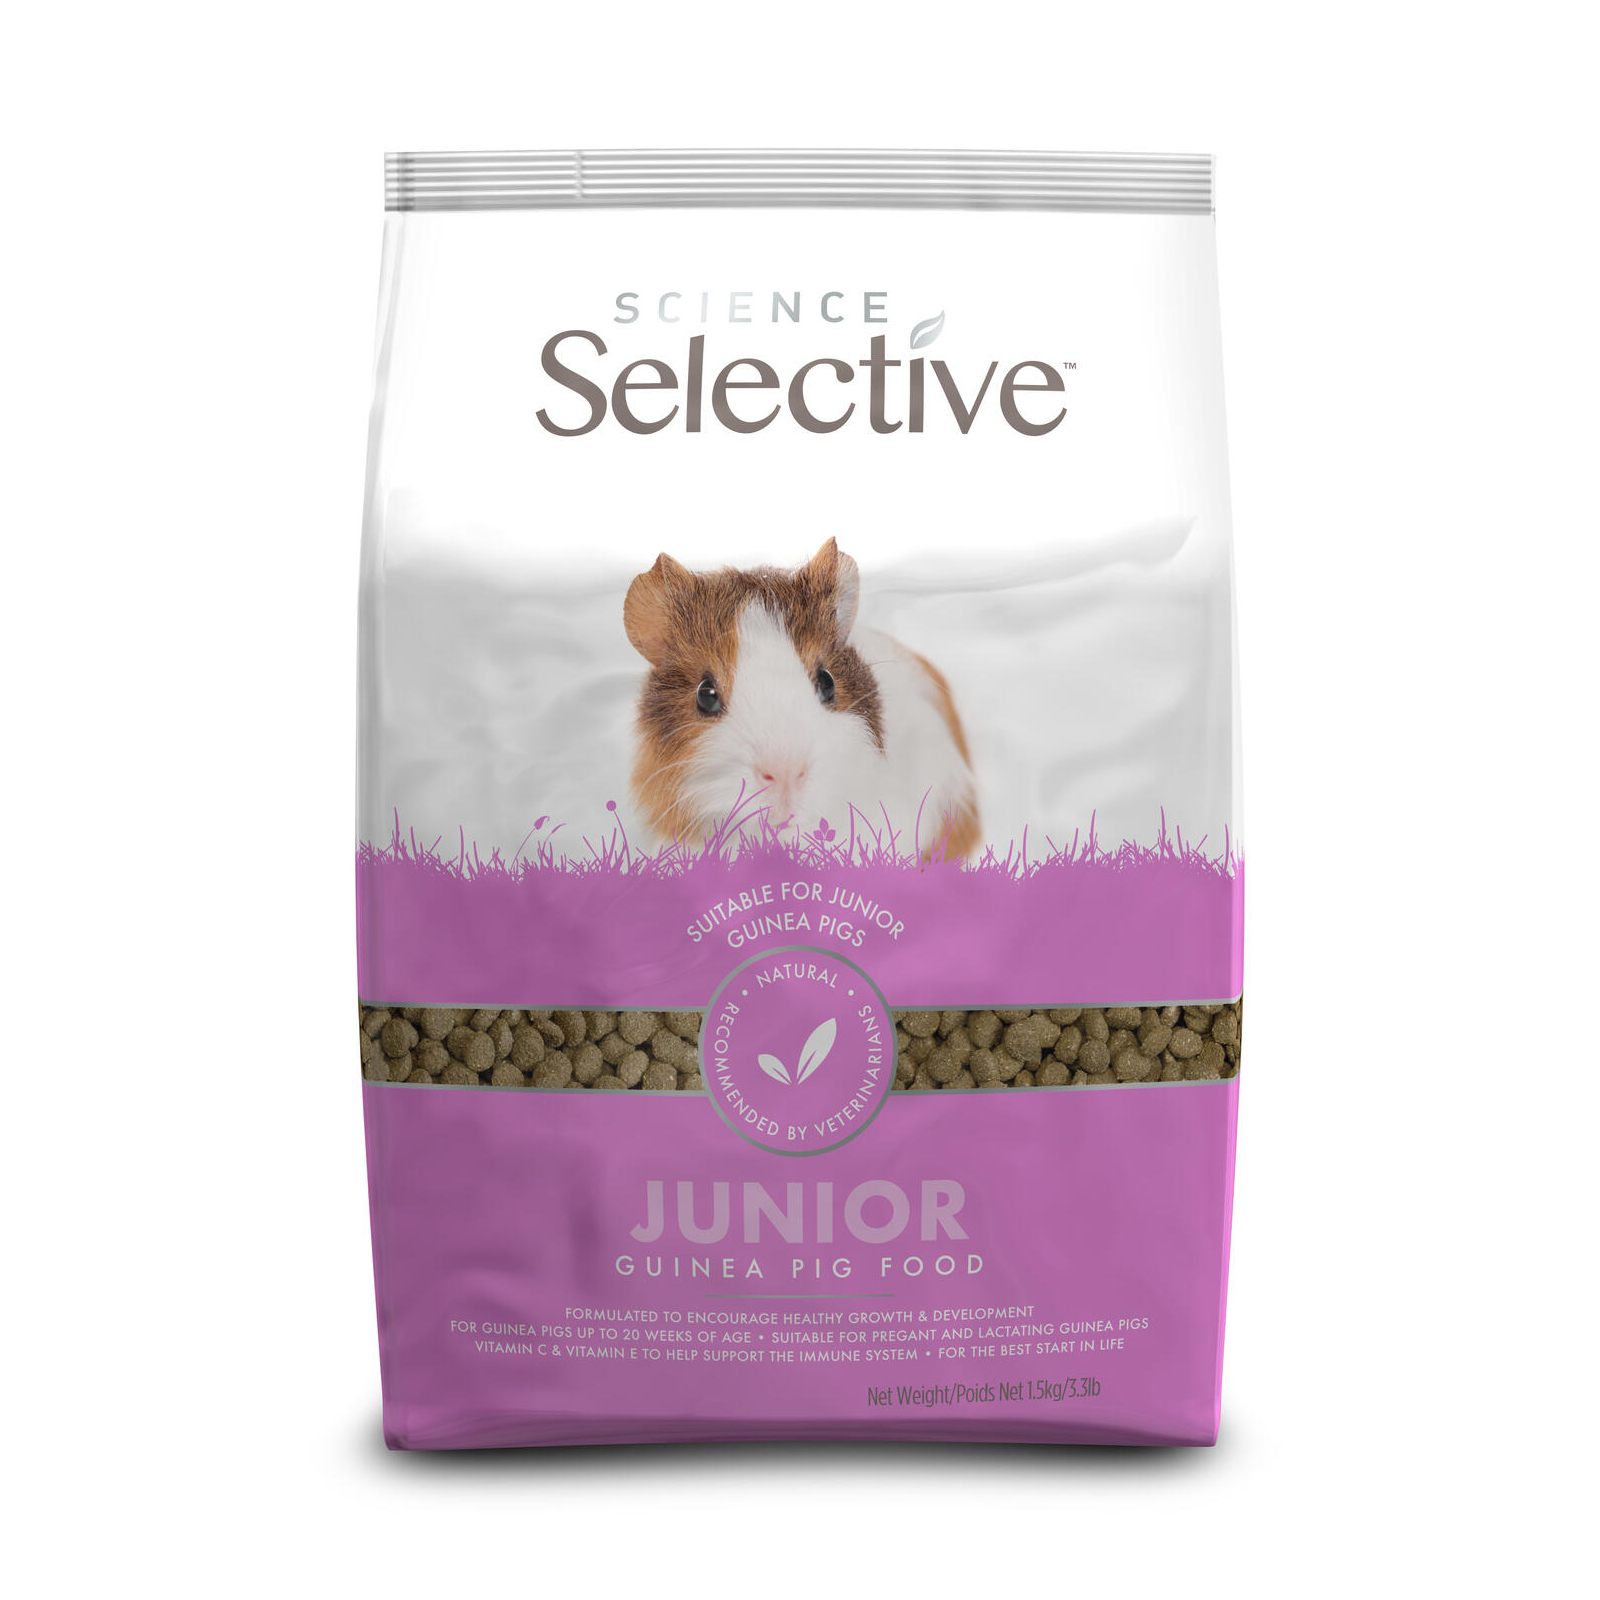 Science Selective Guinea Pig Food Junior